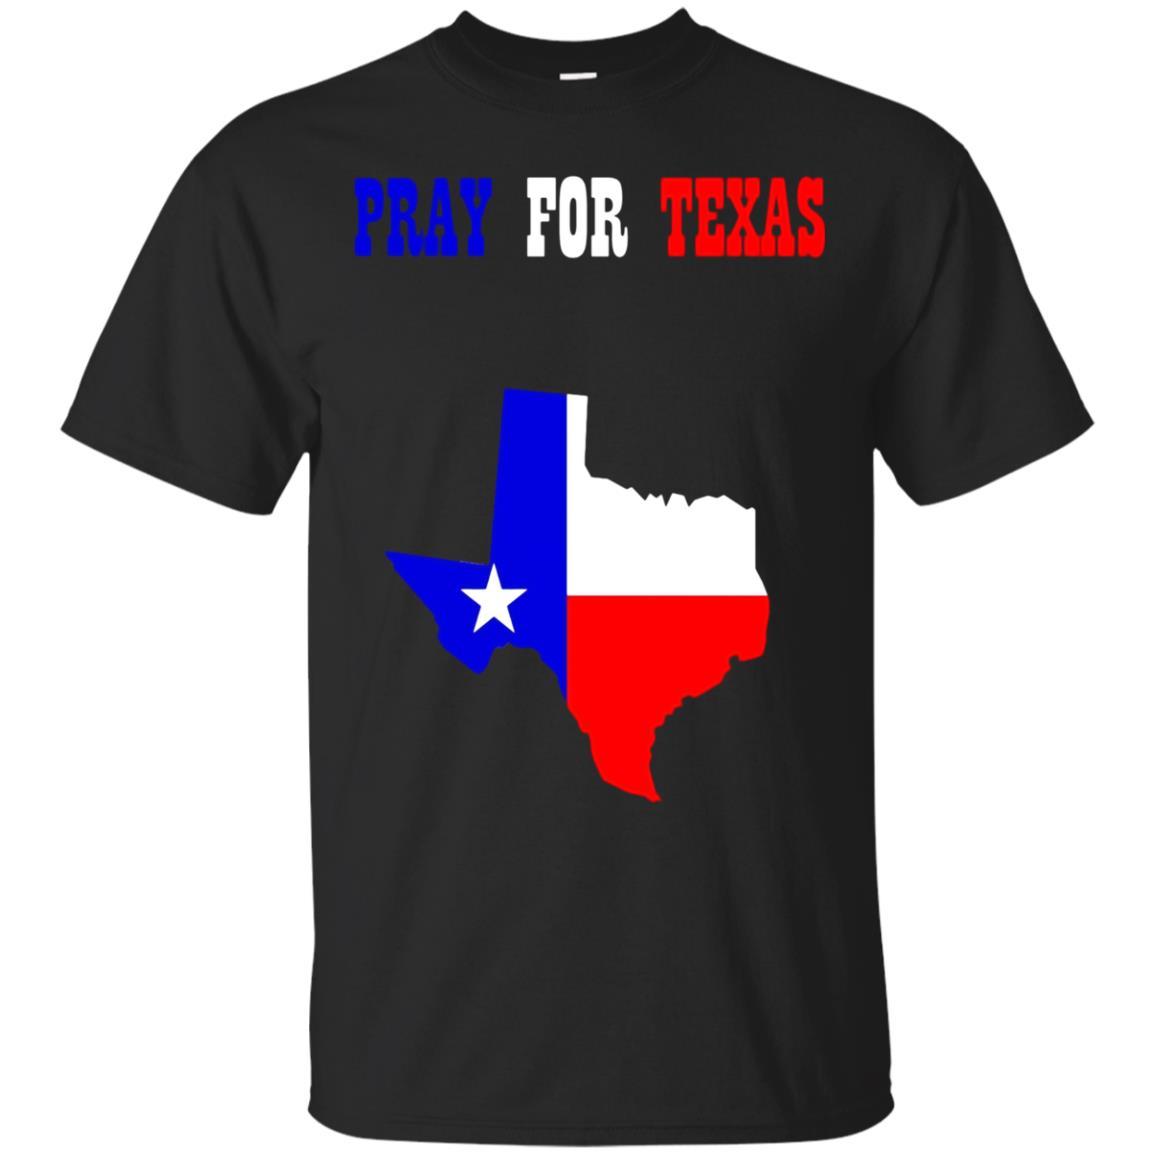 Pray For Texas T-shirt